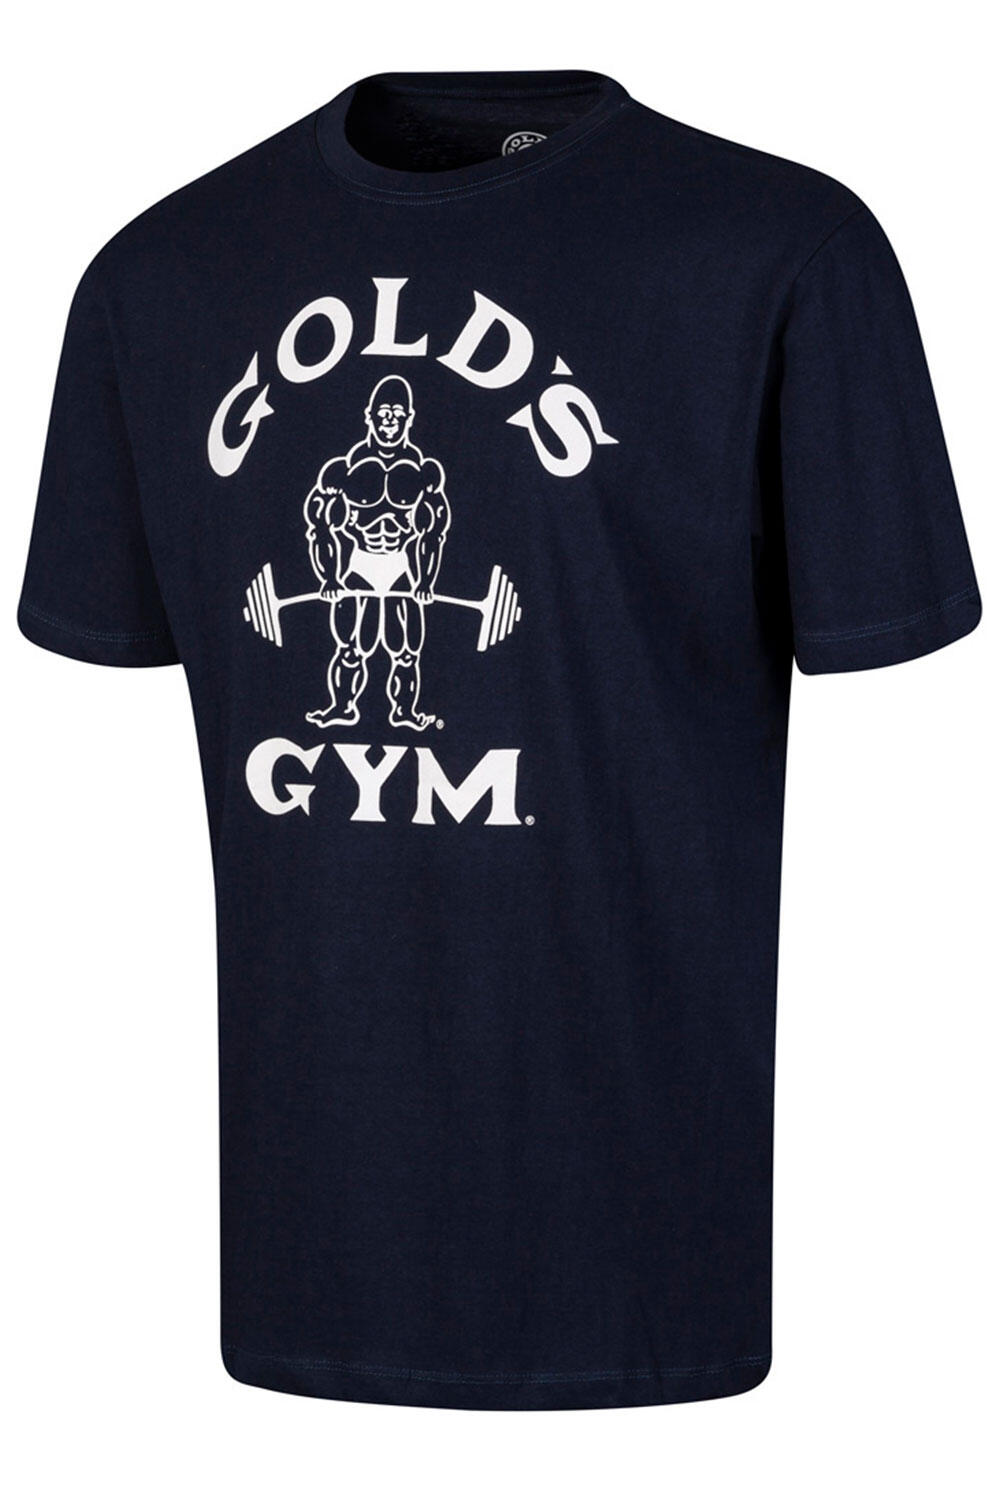 GOLD'S GYM Men's Gold's Gym Classic Muscle Joe Print T-Shirt